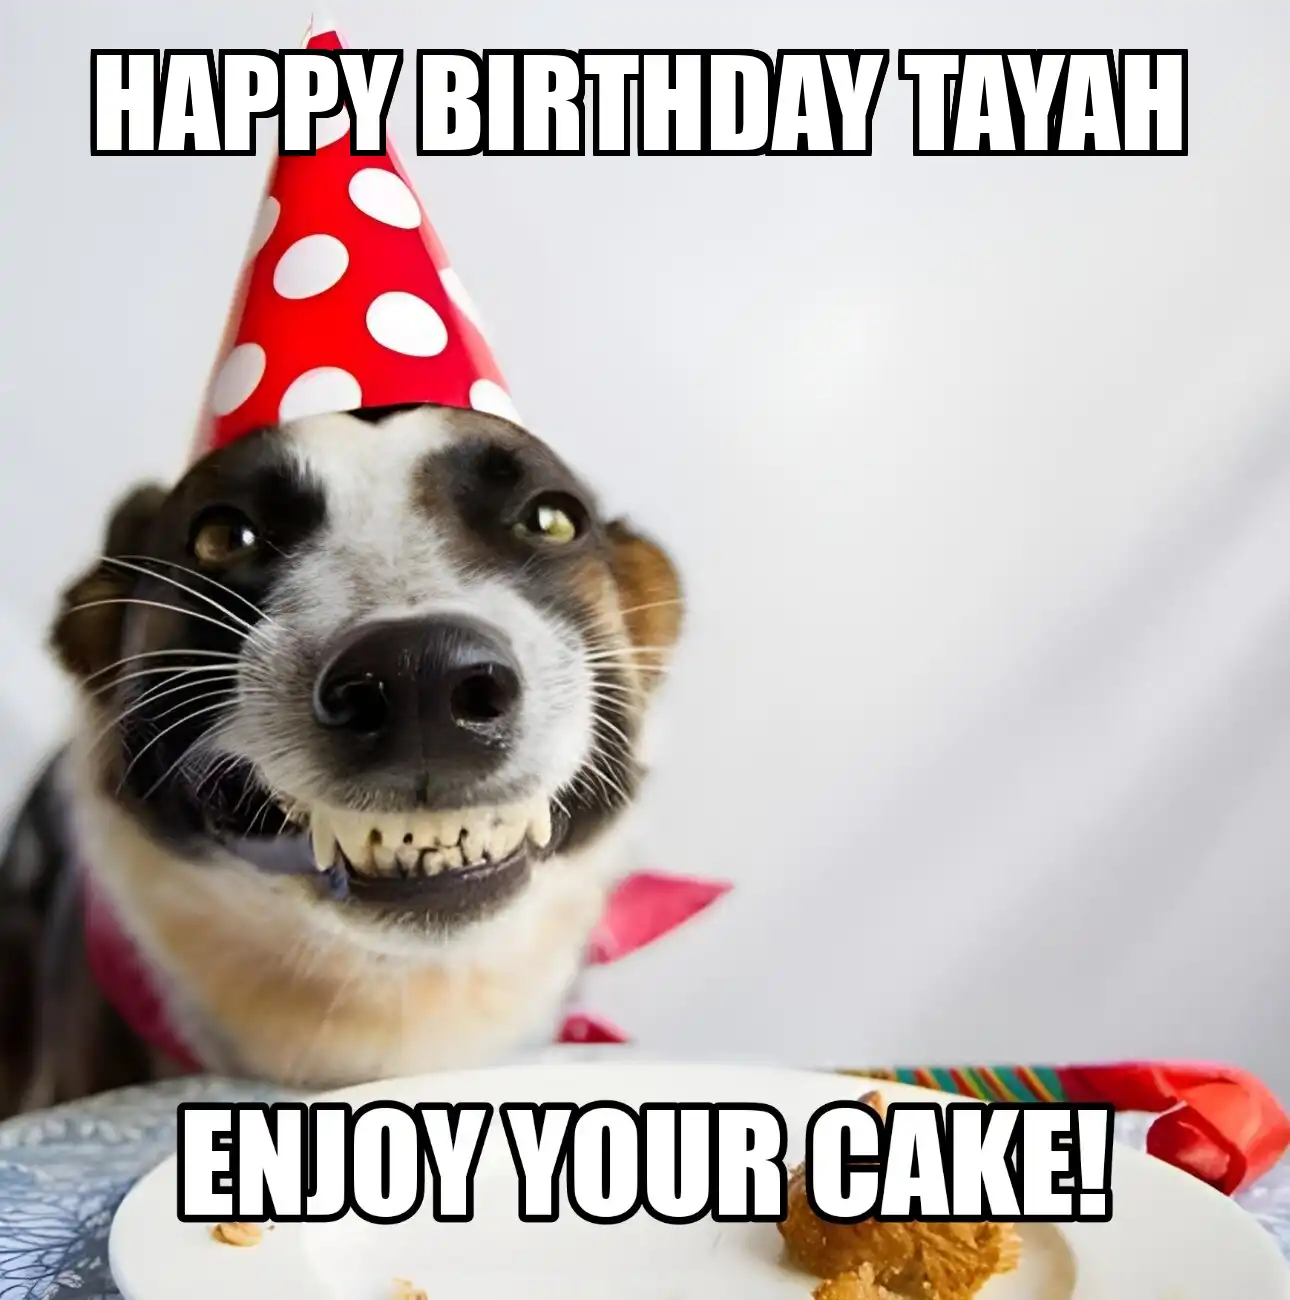 Happy Birthday Tayah Enjoy Your Cake Dog Meme